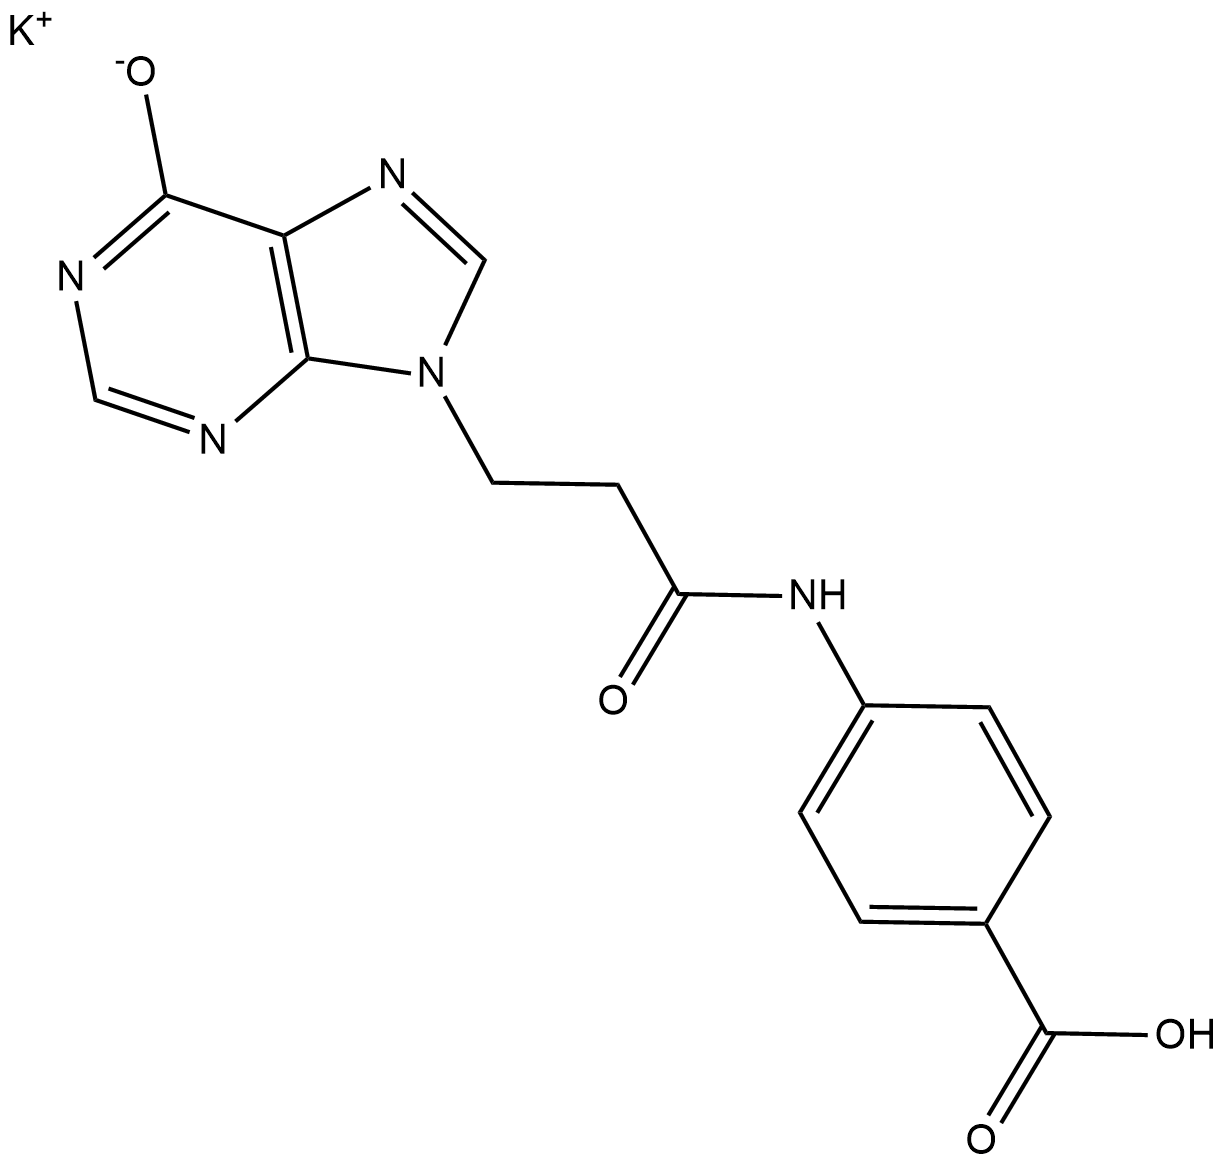 Leteprinim (potassium salt) Chemische Struktur